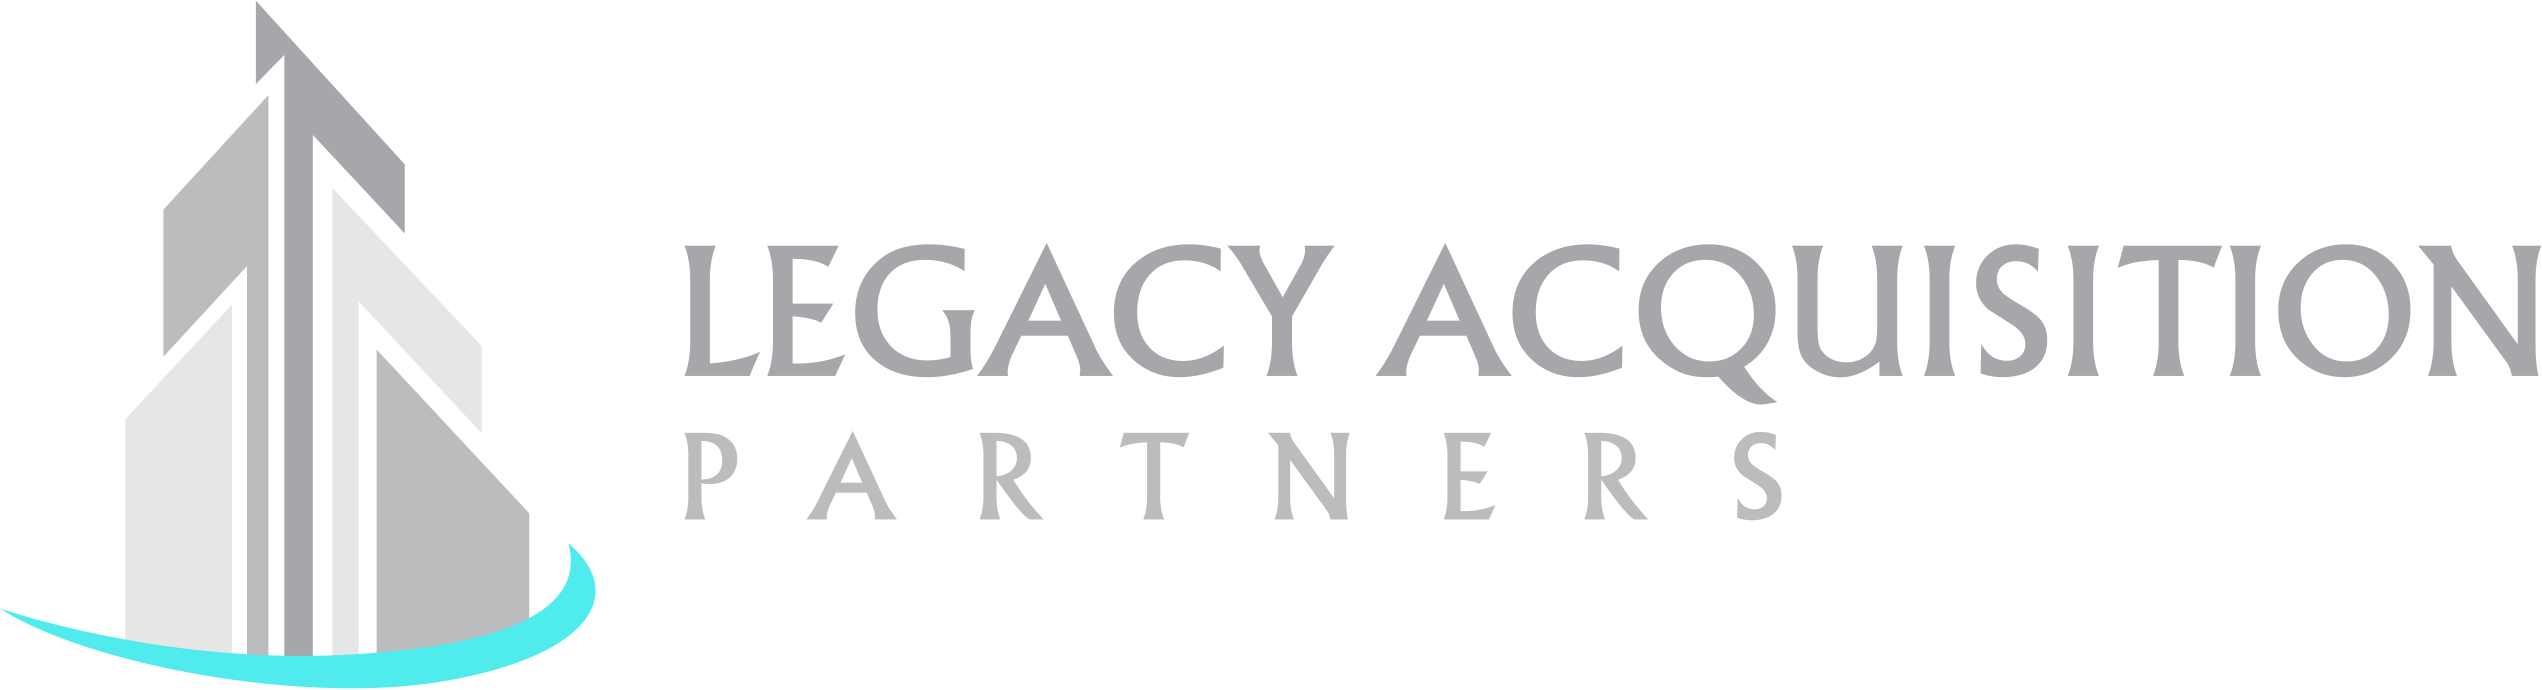 Legacy Acquisition Partners